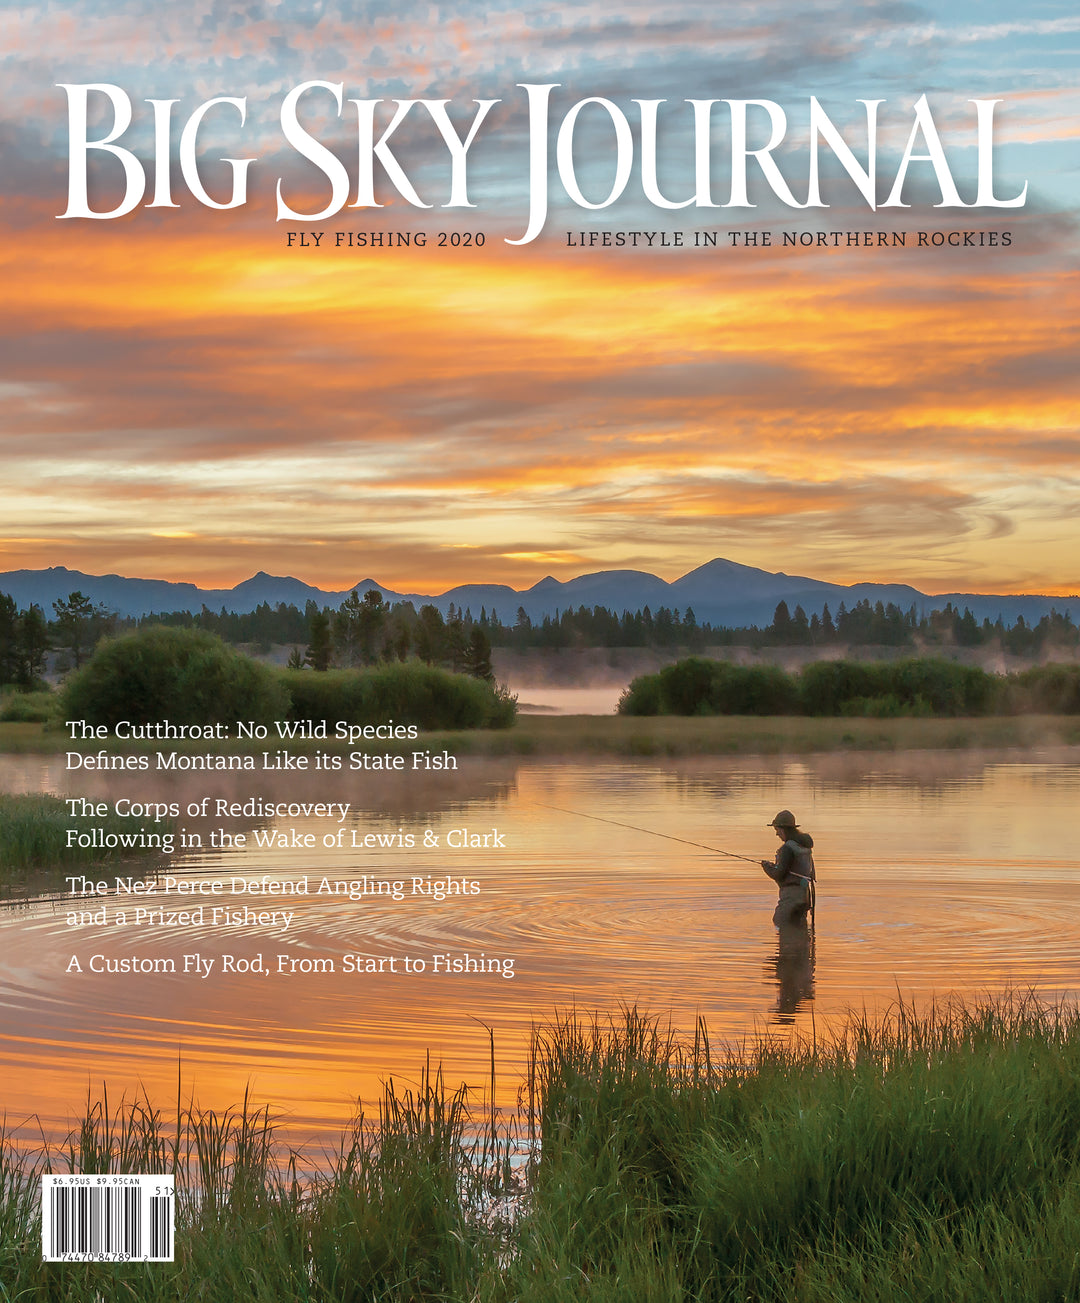 "From Scratch" - Big Sky Journal